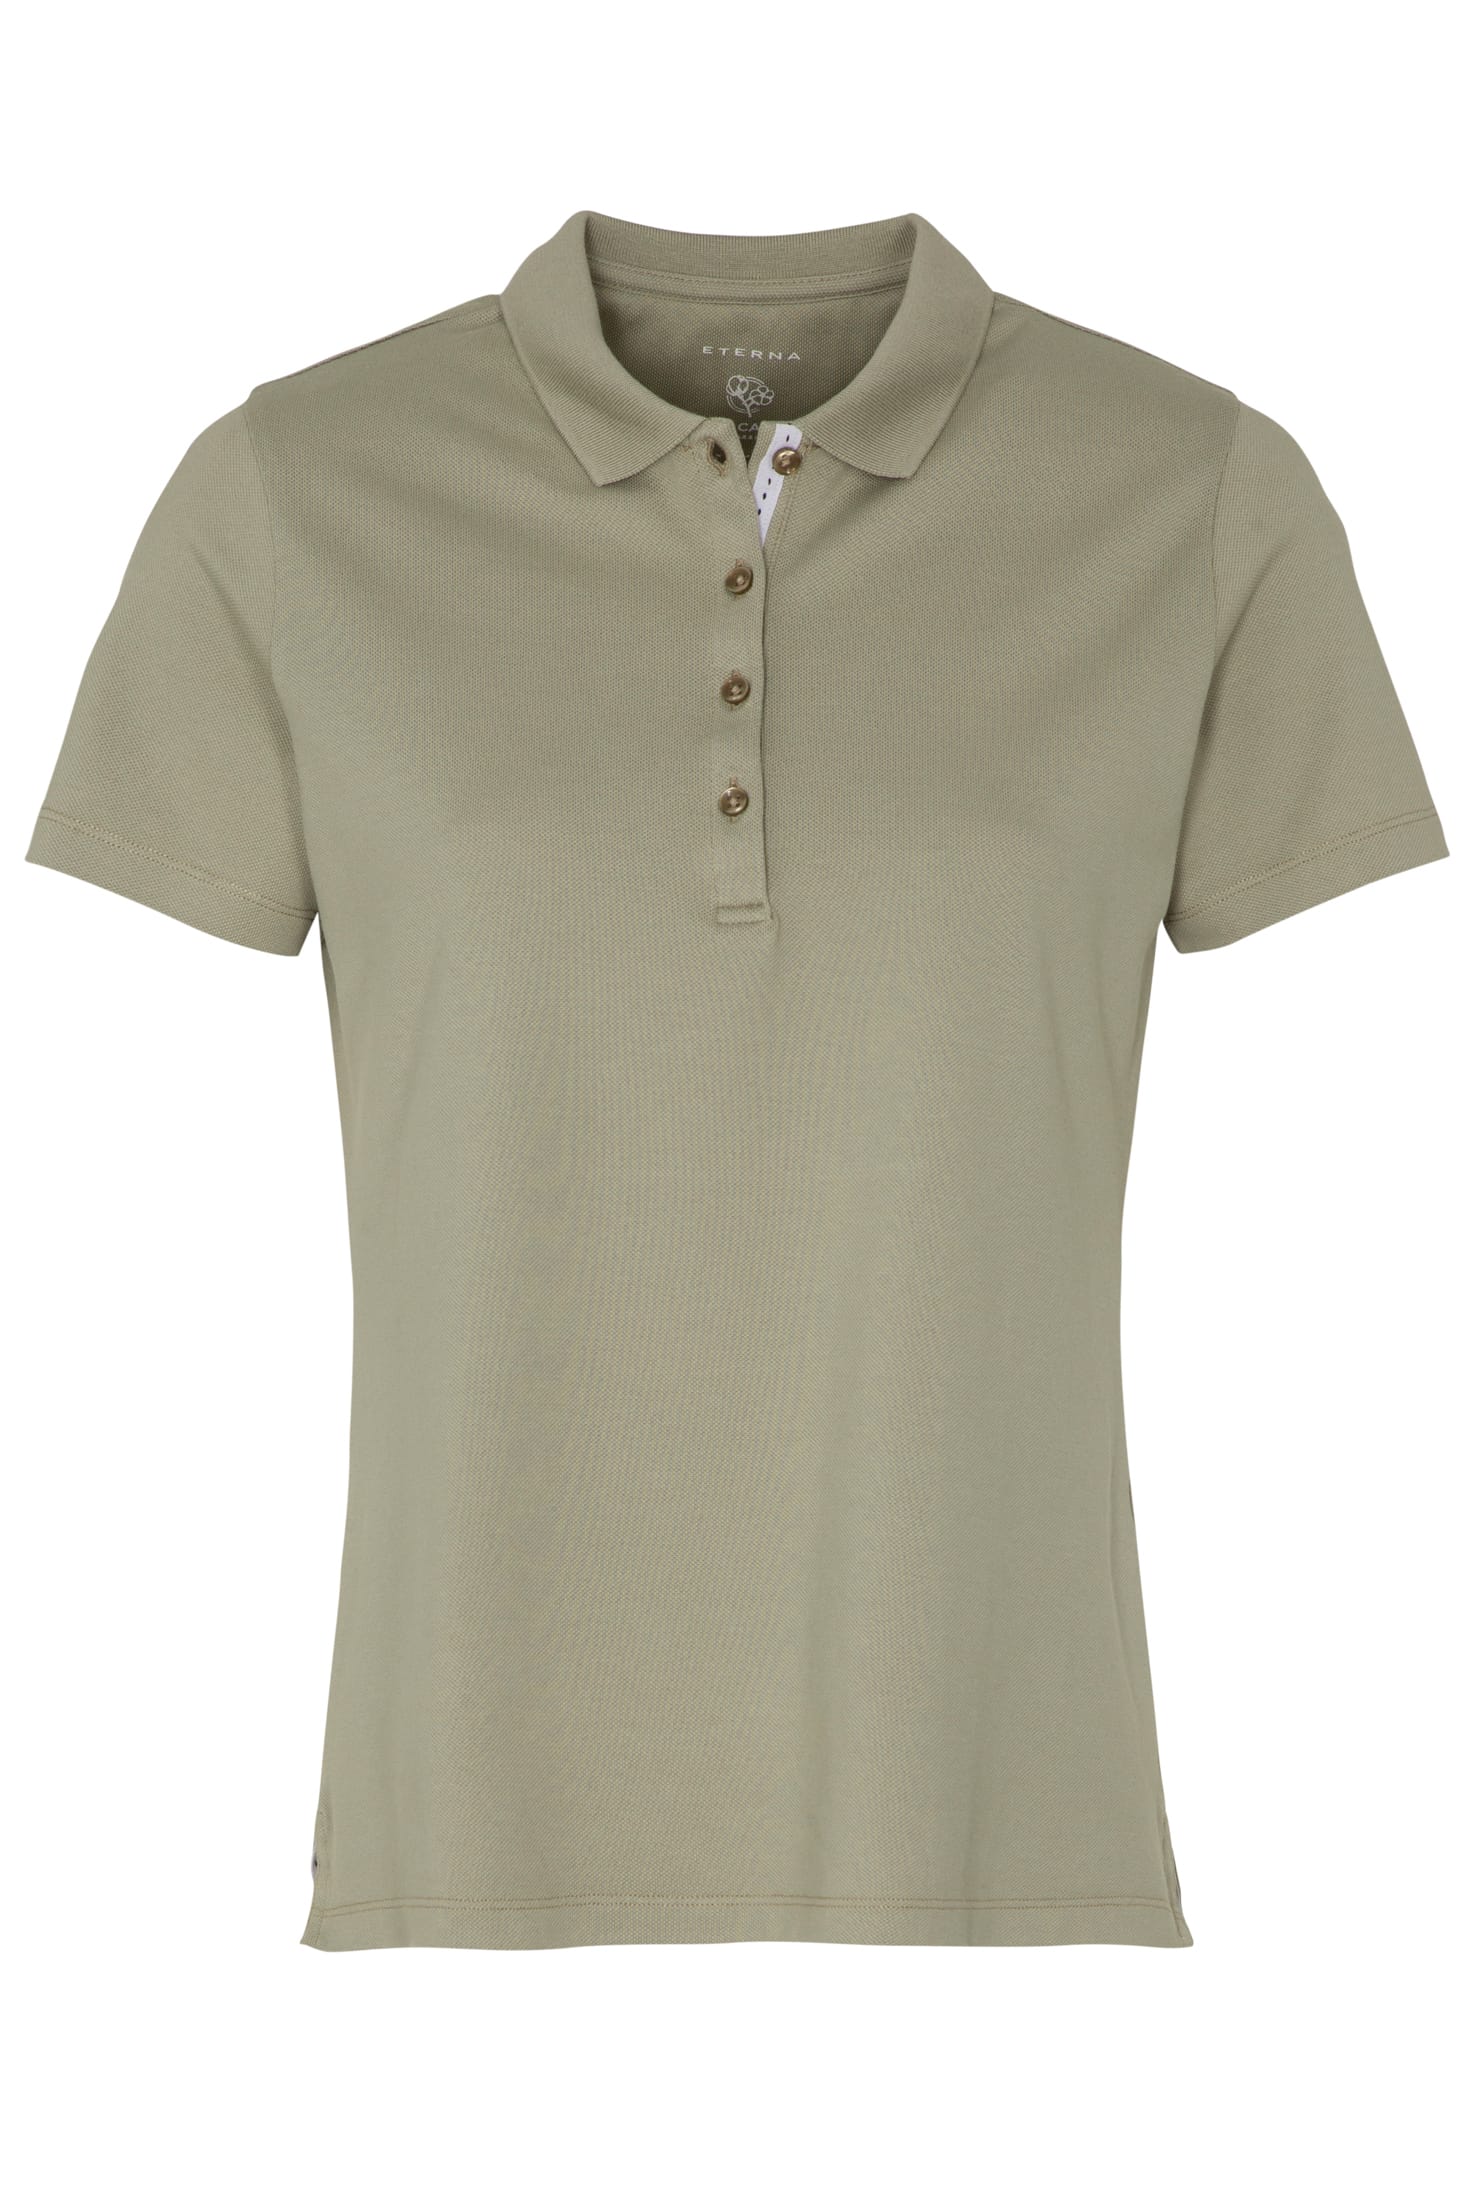 ETERNA CLASSIC FIT Poloshirt hellgrün pique 5535-41-H530 | Eterna |  Poloshirts | Damen Bekleidung | Jeans-Manufaktur